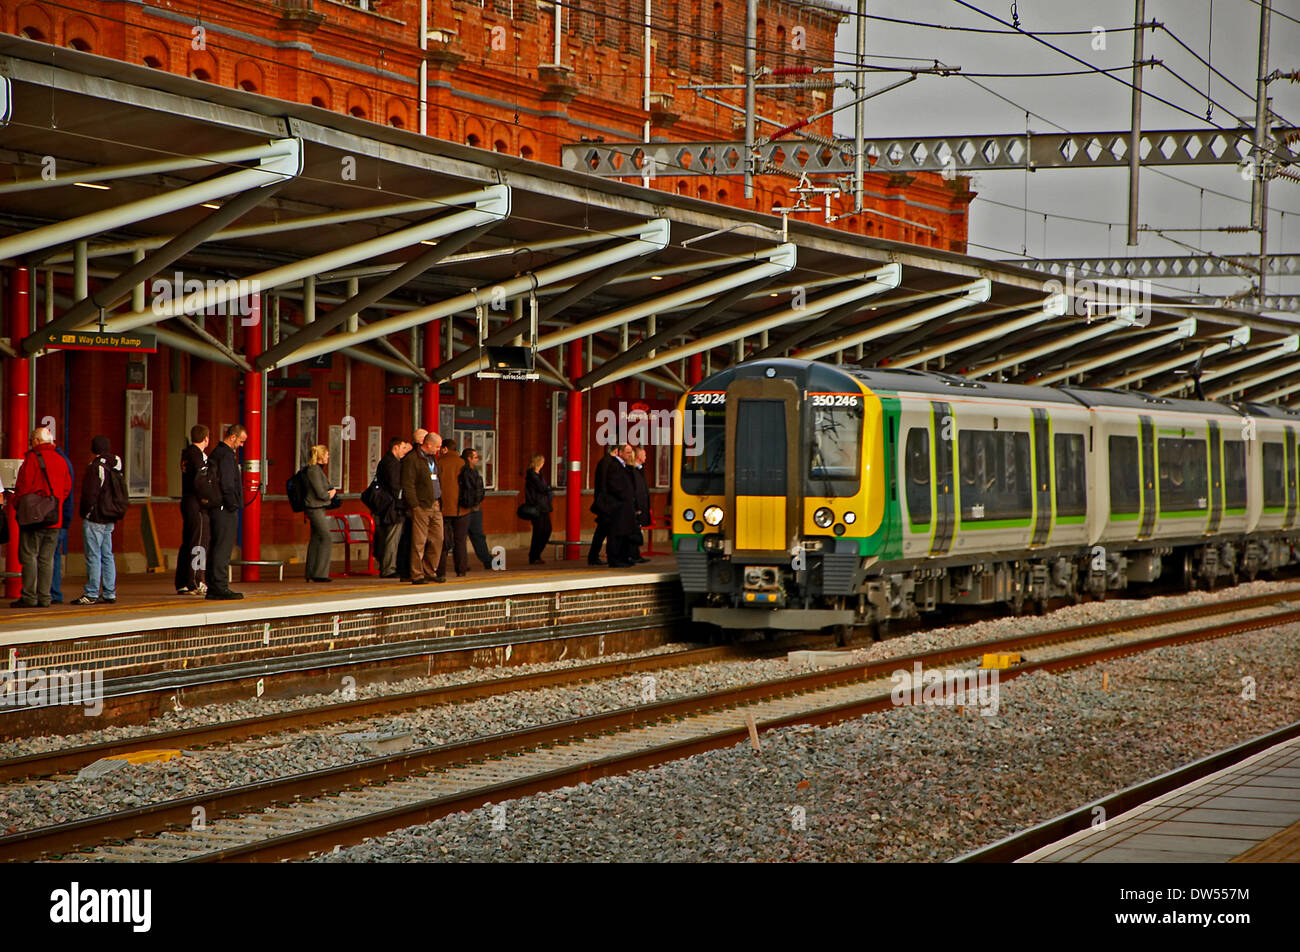 Passenger train waiting in a station platform Stock Photo